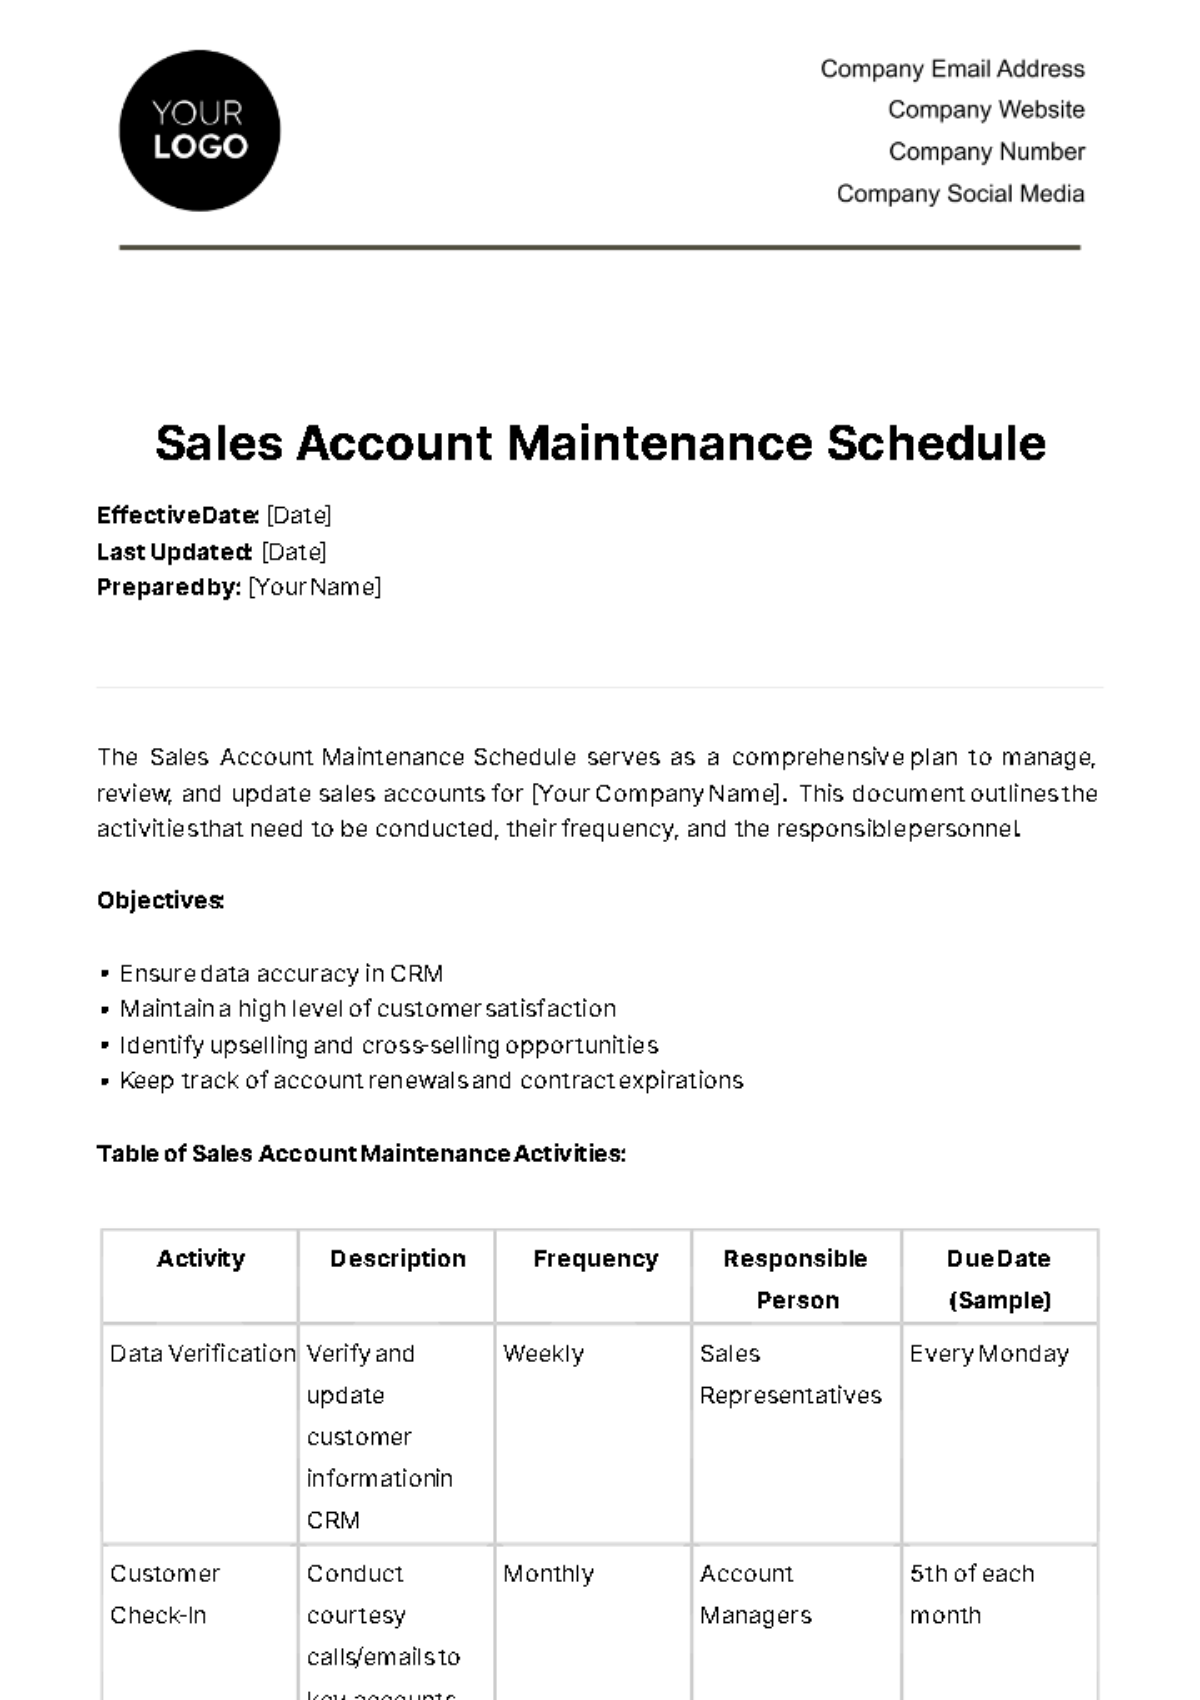 Sales Account Maintenance Schedule Template